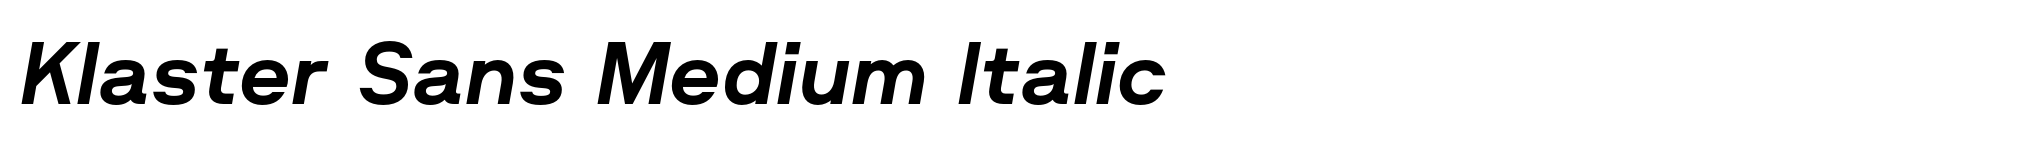 Klaster Sans Medium Italic image